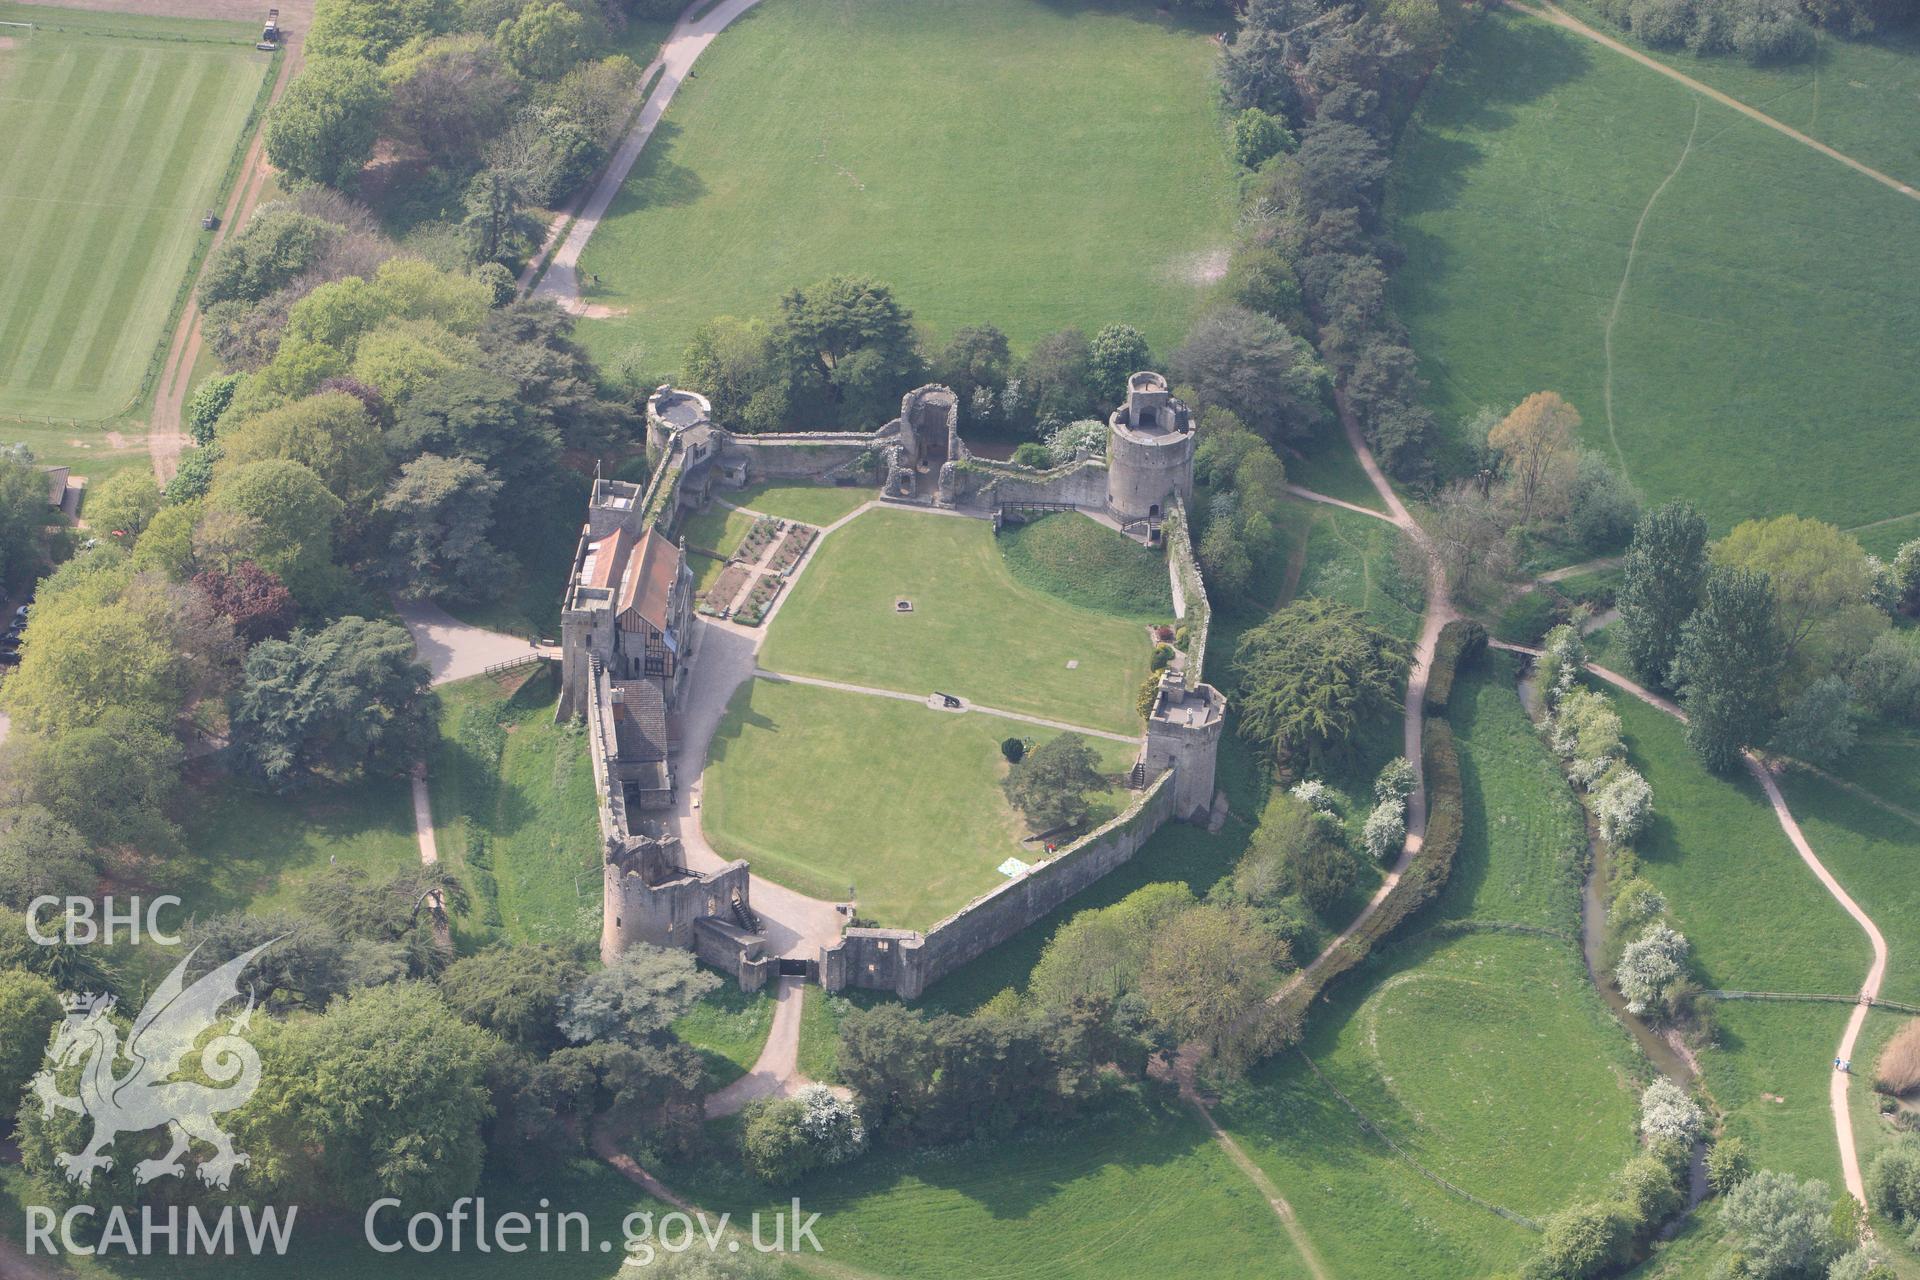 RCAHMW colour oblique photograph of Caldicot Castle. Taken by Toby Driver on 26/04/2011.